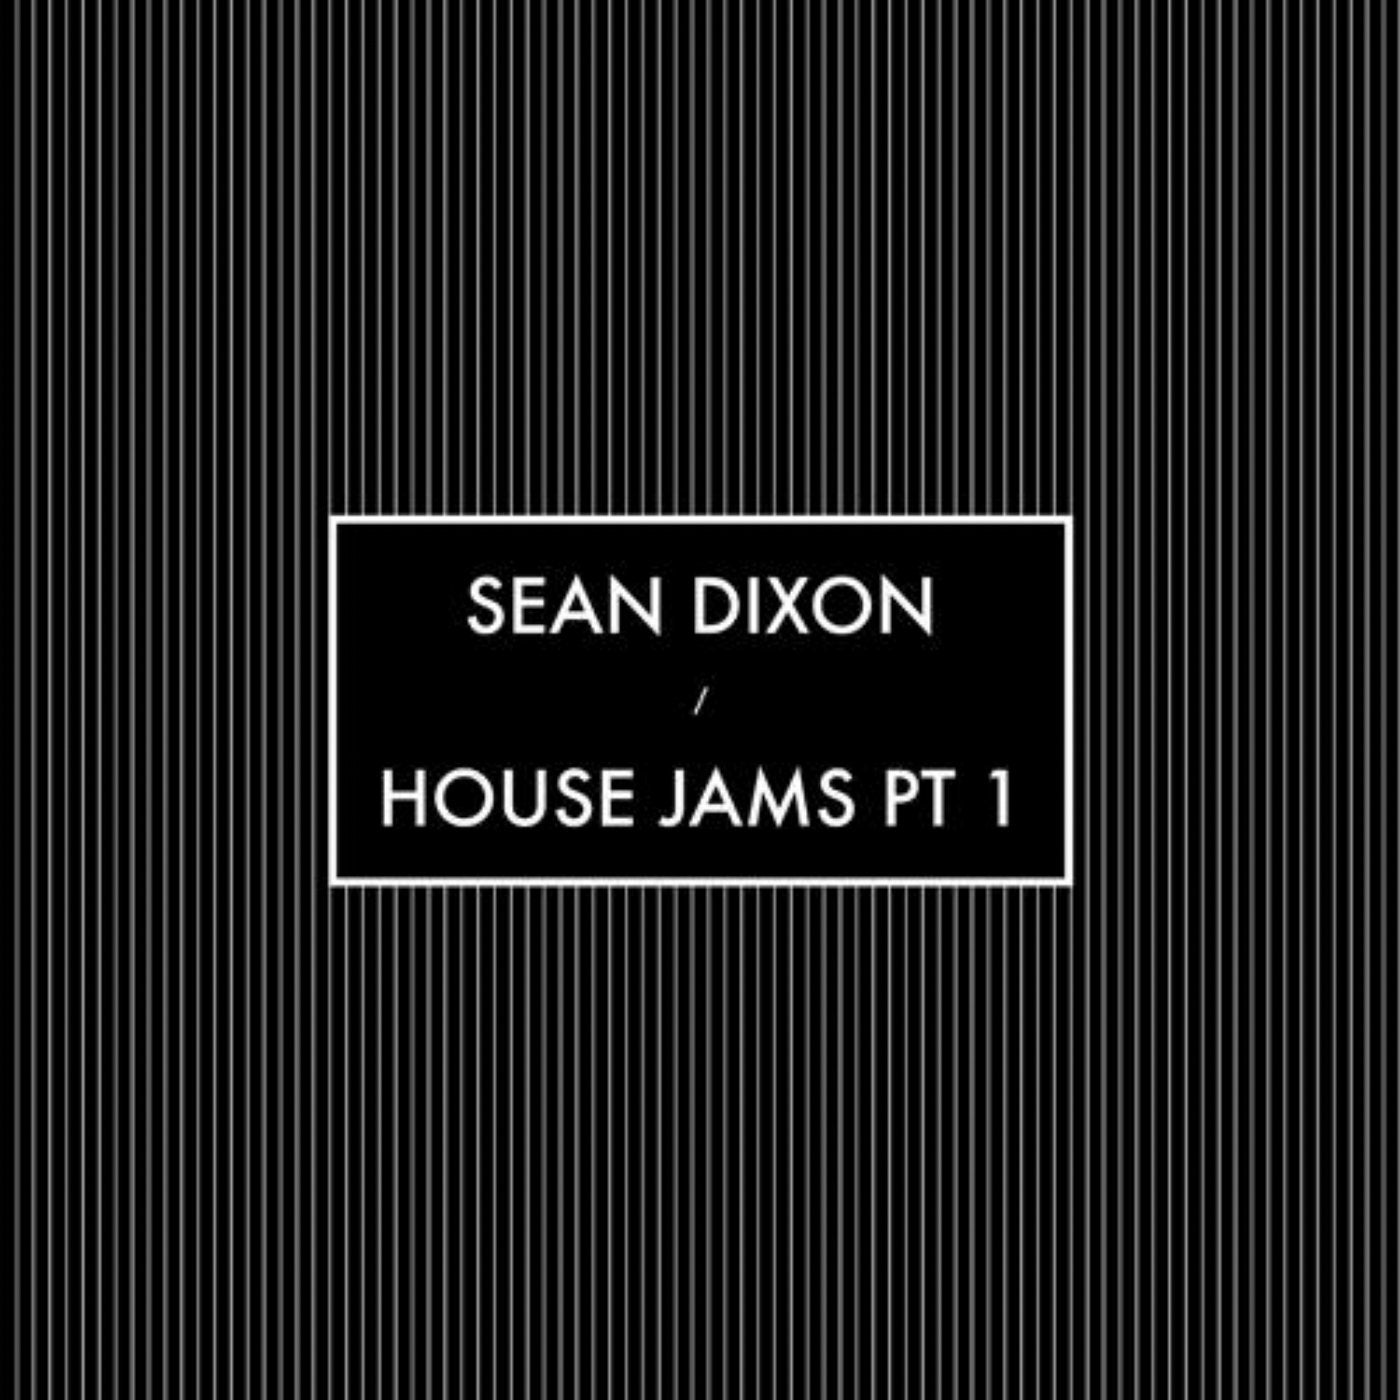 House Jams PT 1